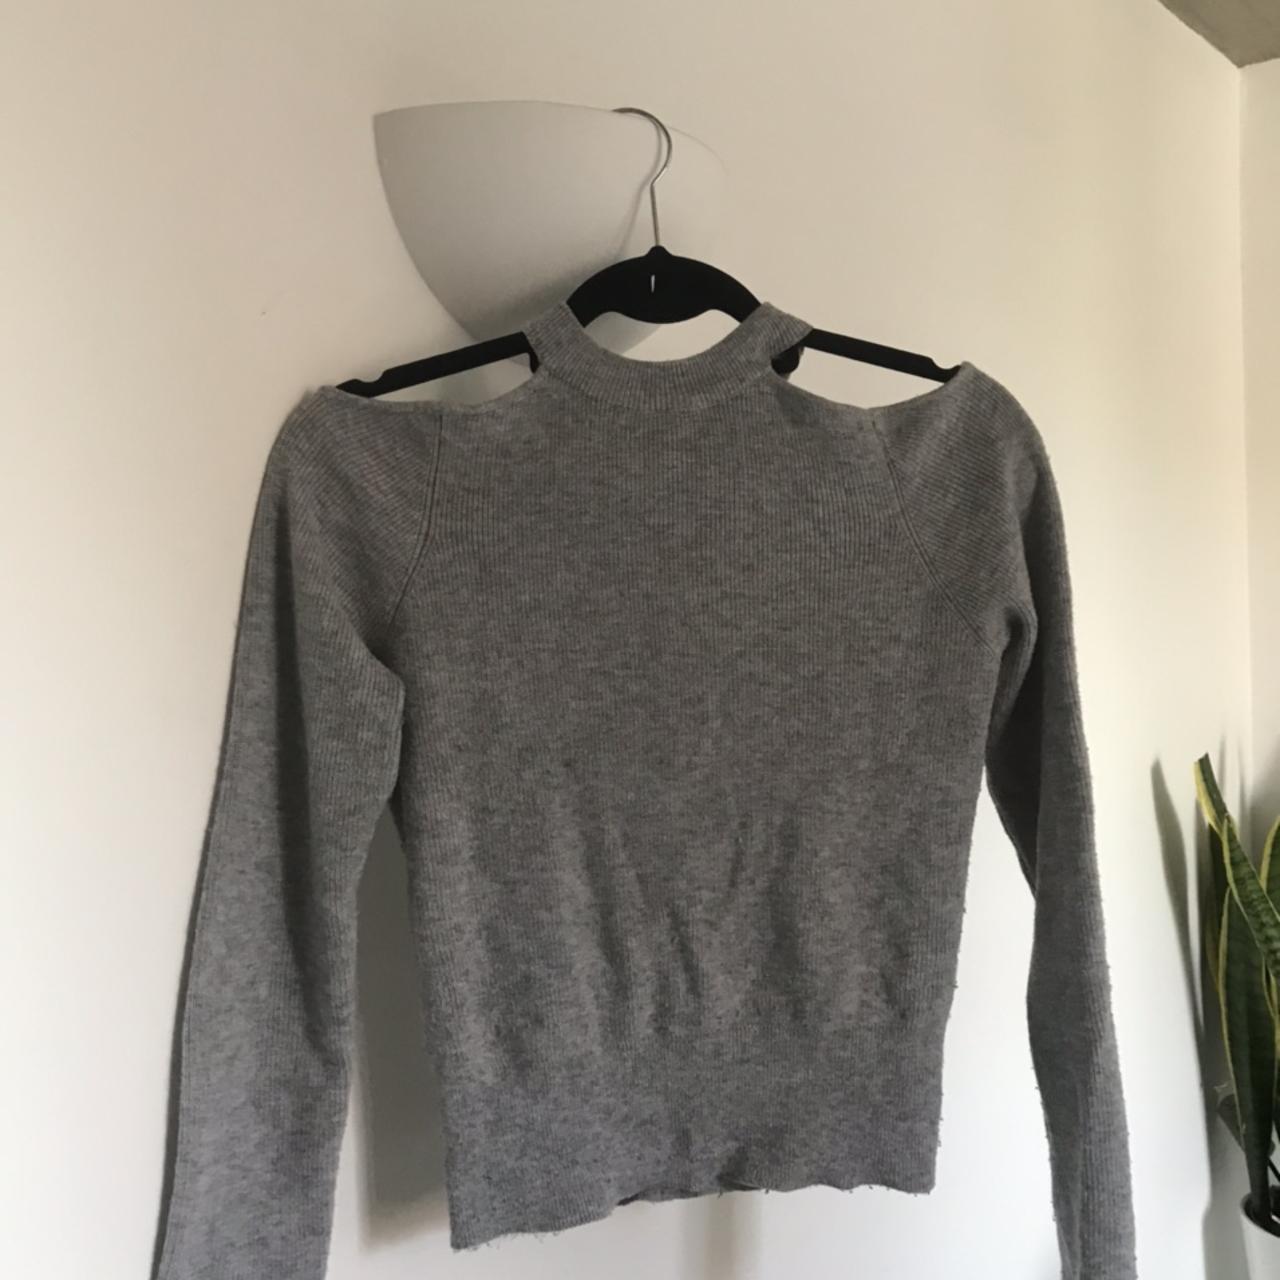 Super soft and lightweight wool-blend sweater with... - Depop